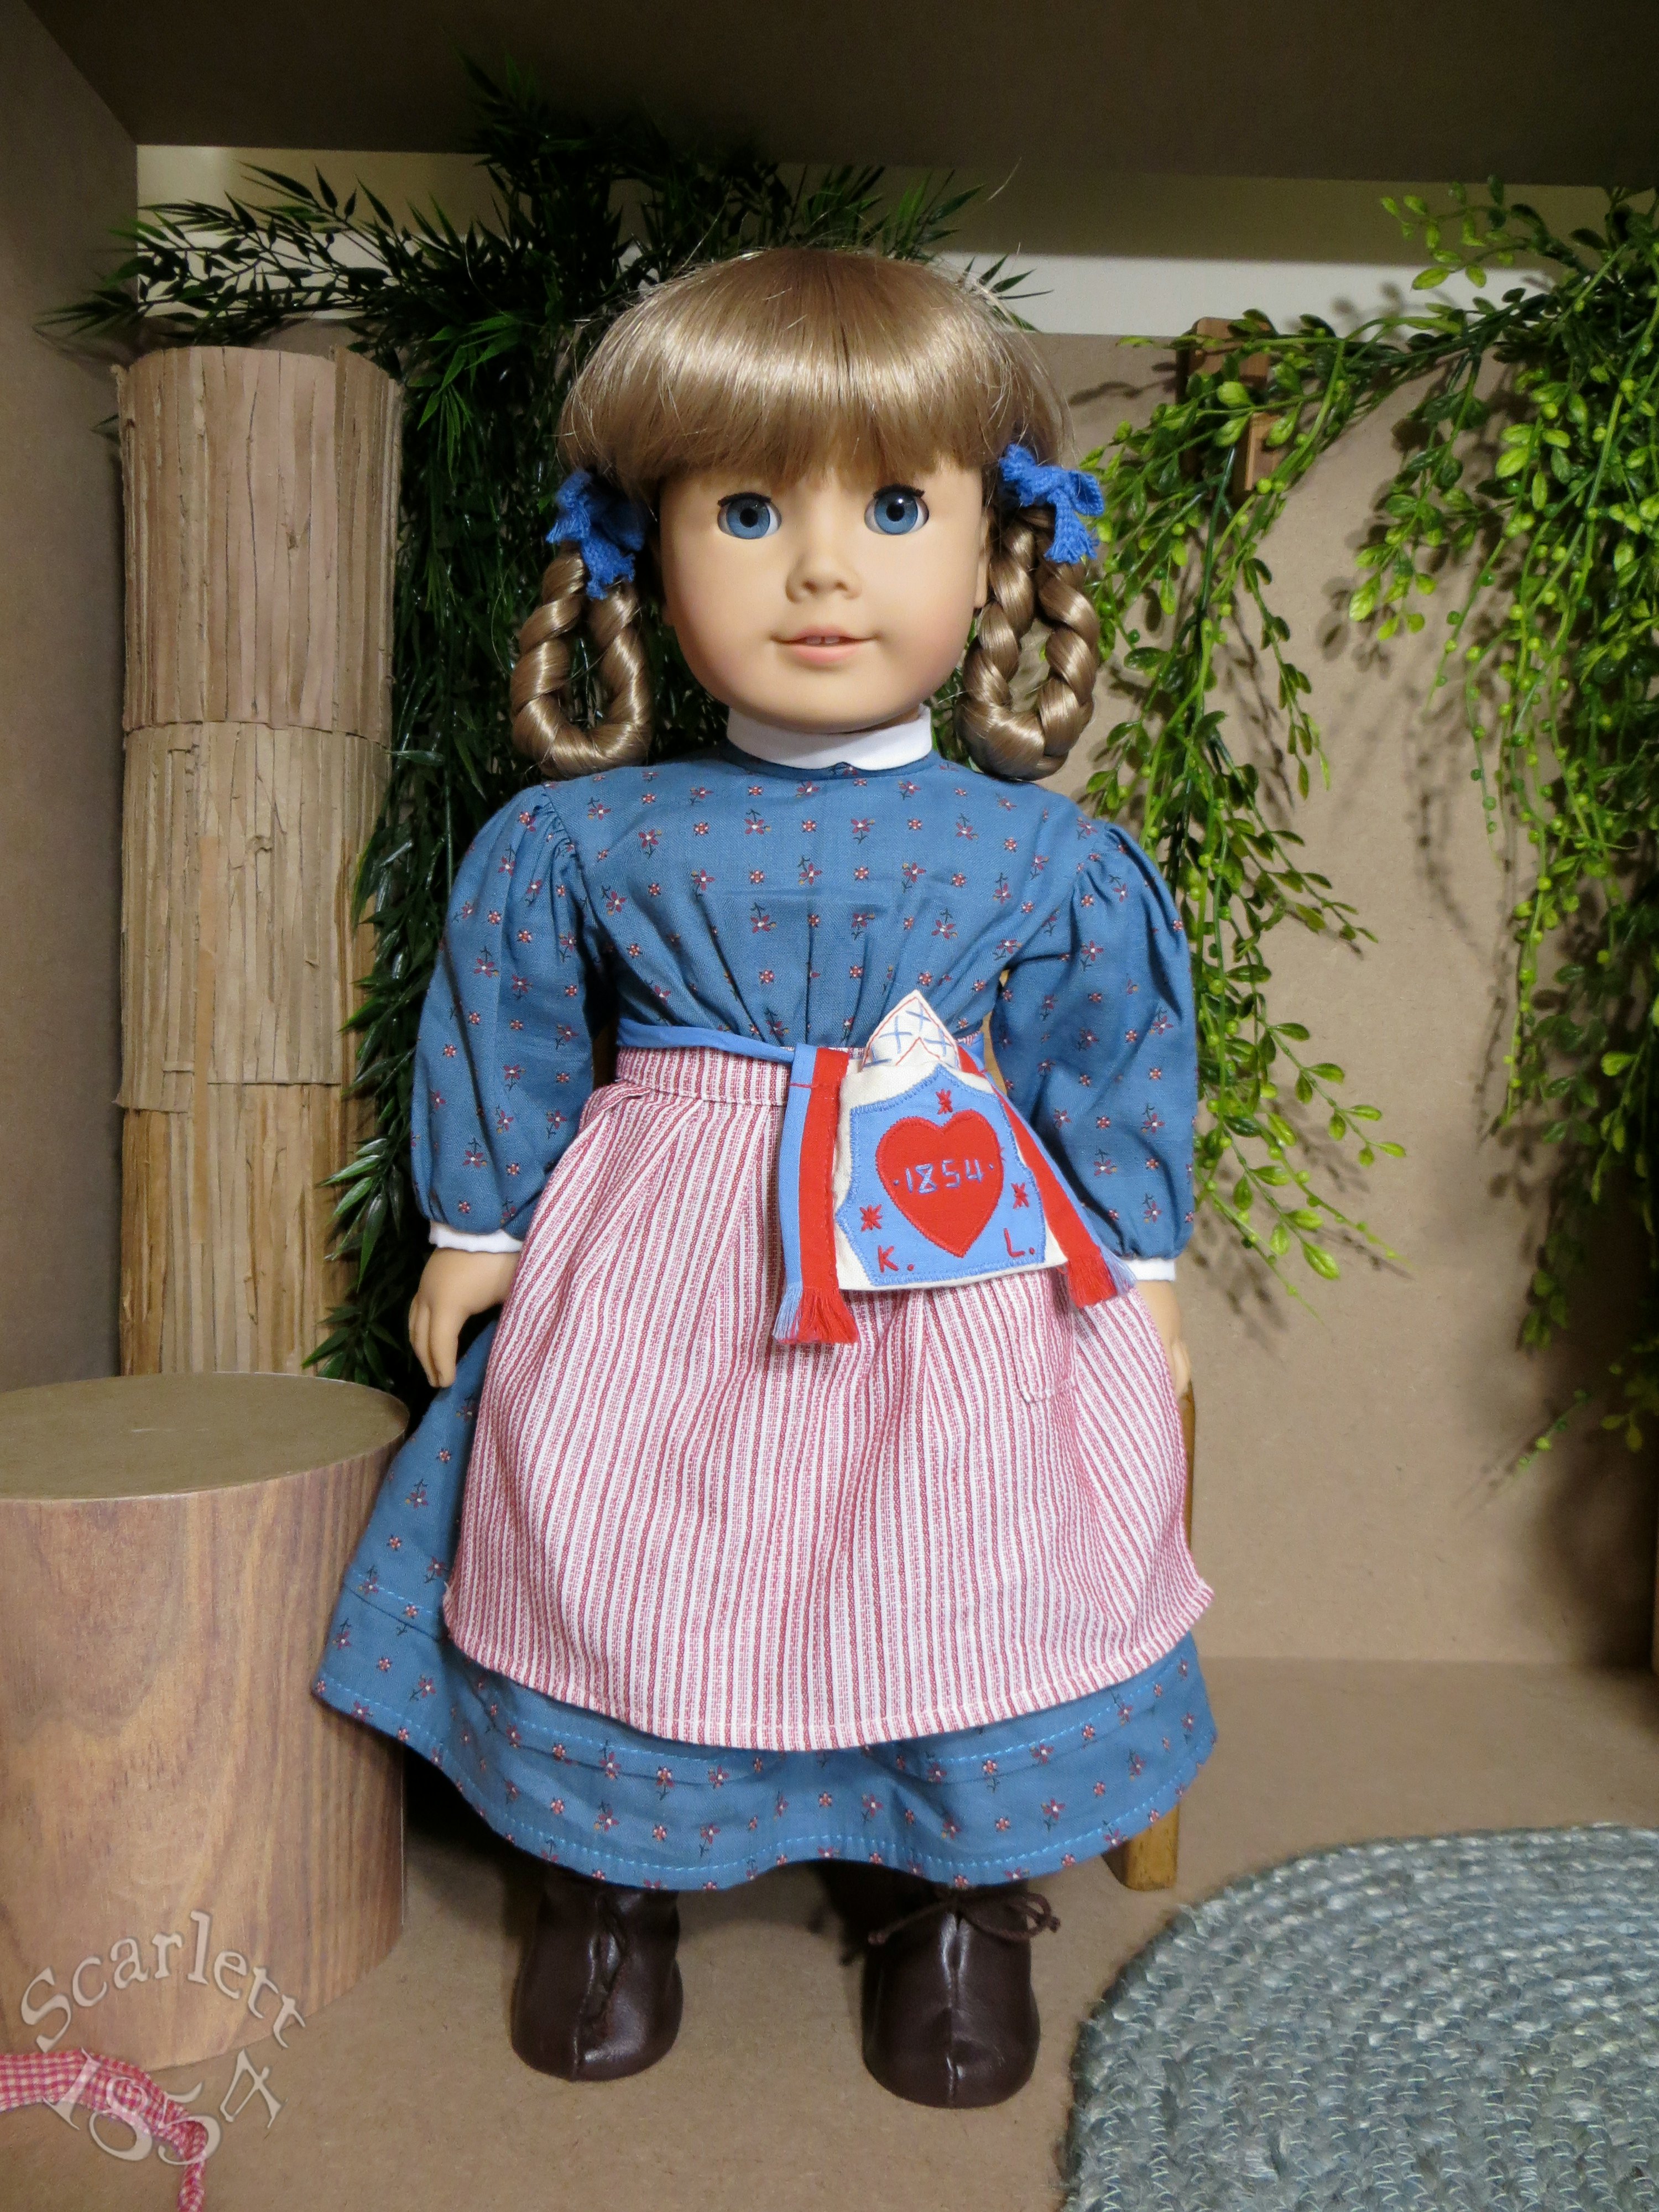 american girl dolls that are worth money